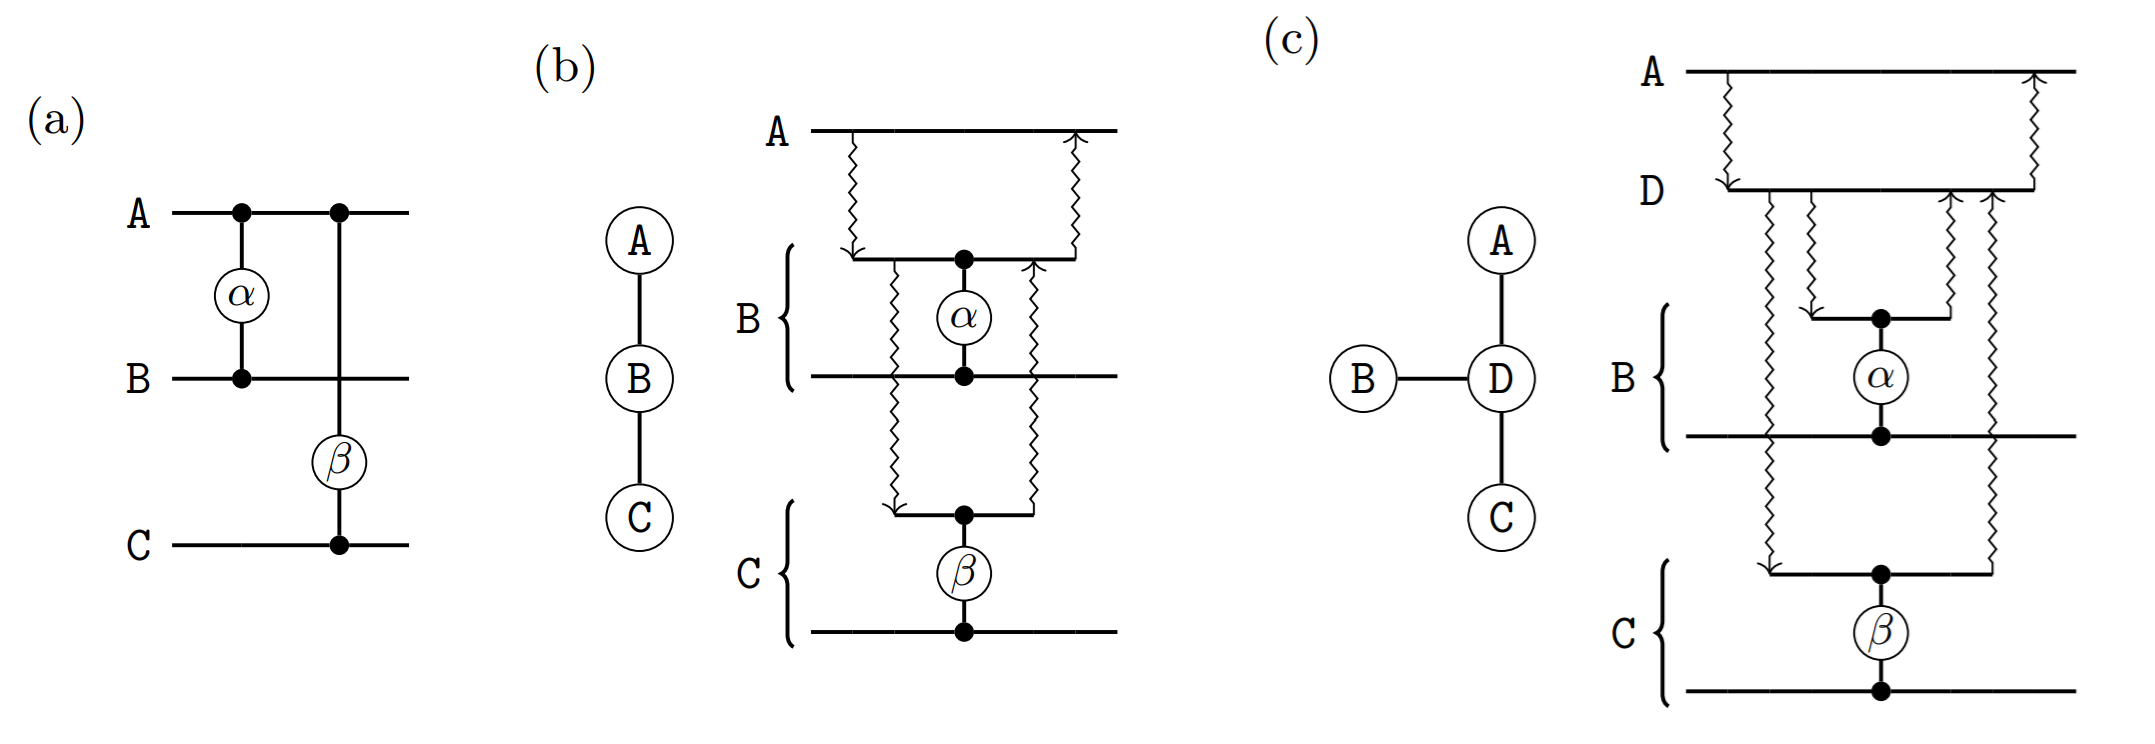 Distribution using a Steiner tree